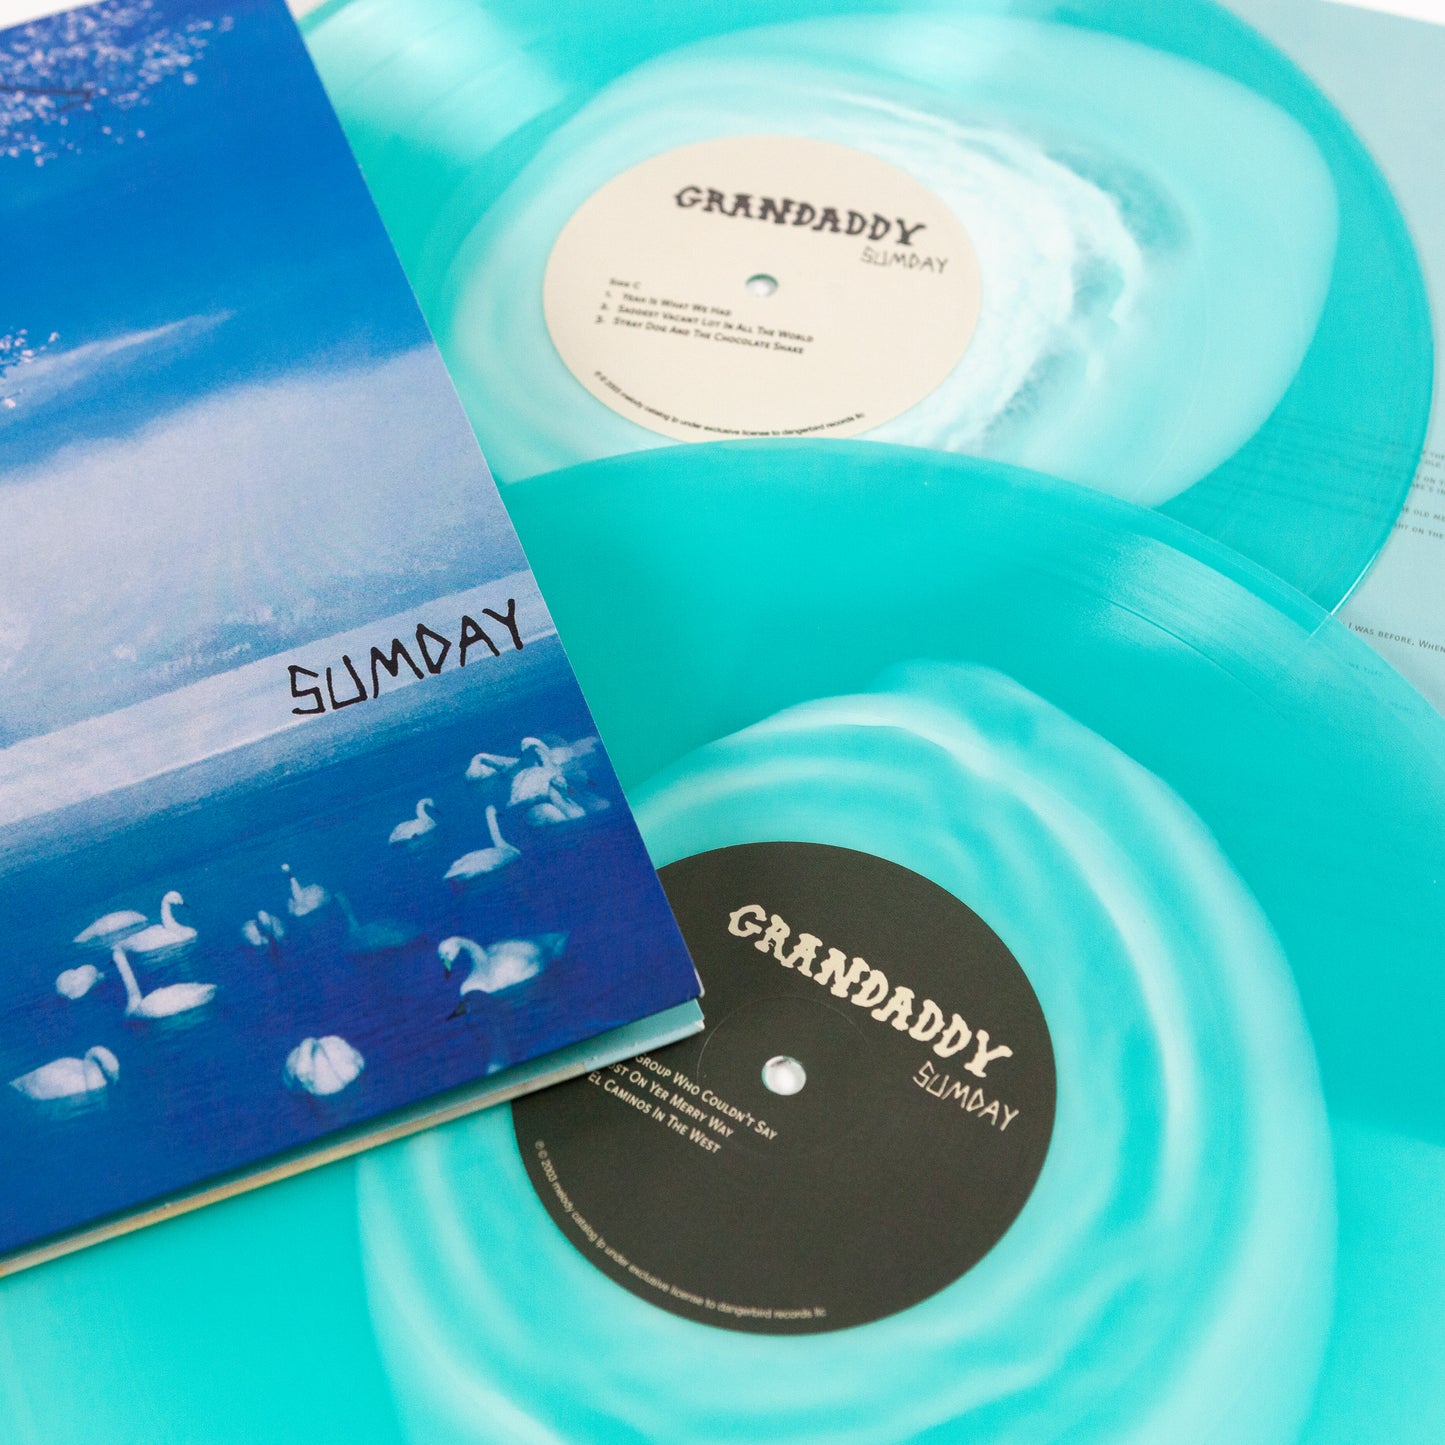 Grandaddy - Sumday - Double Vinyl LP (Wiper Fluid Blue)